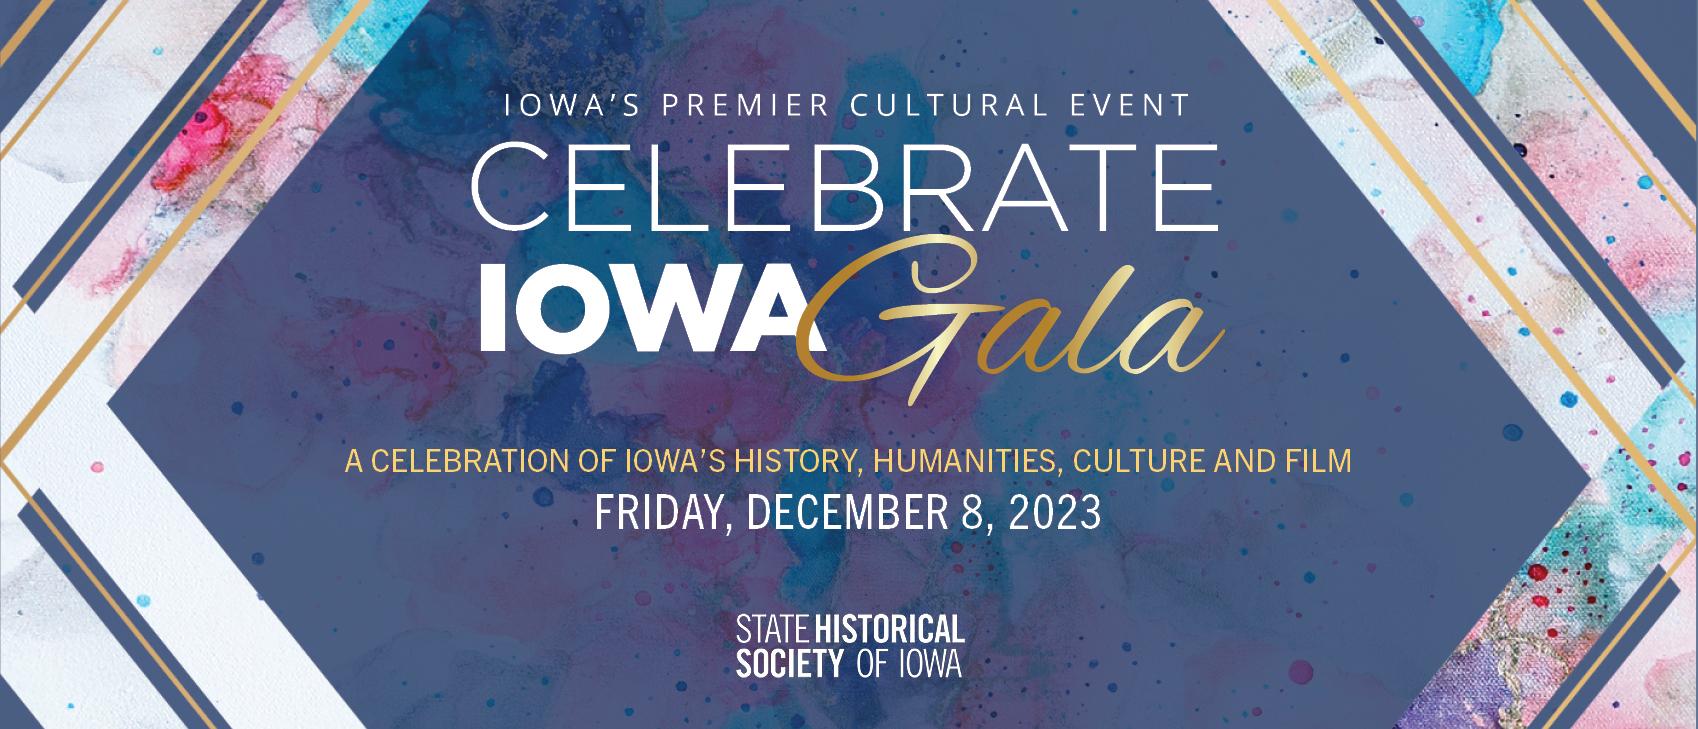 Celebrate Iowa Gala State Historical Society of Iowa